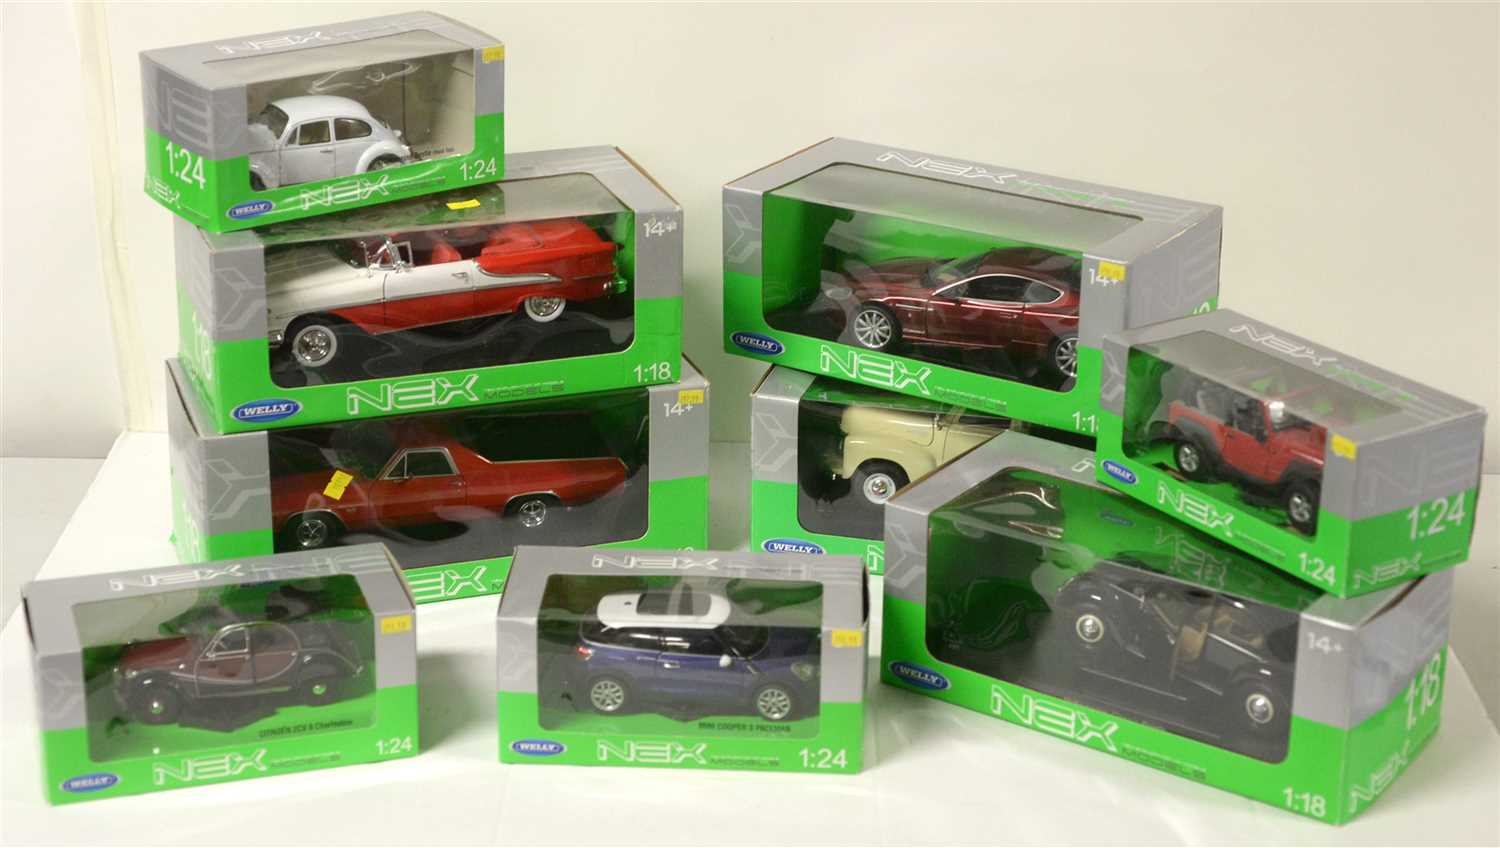 Lot 1293 - Die-cast model cars by Nex Models.